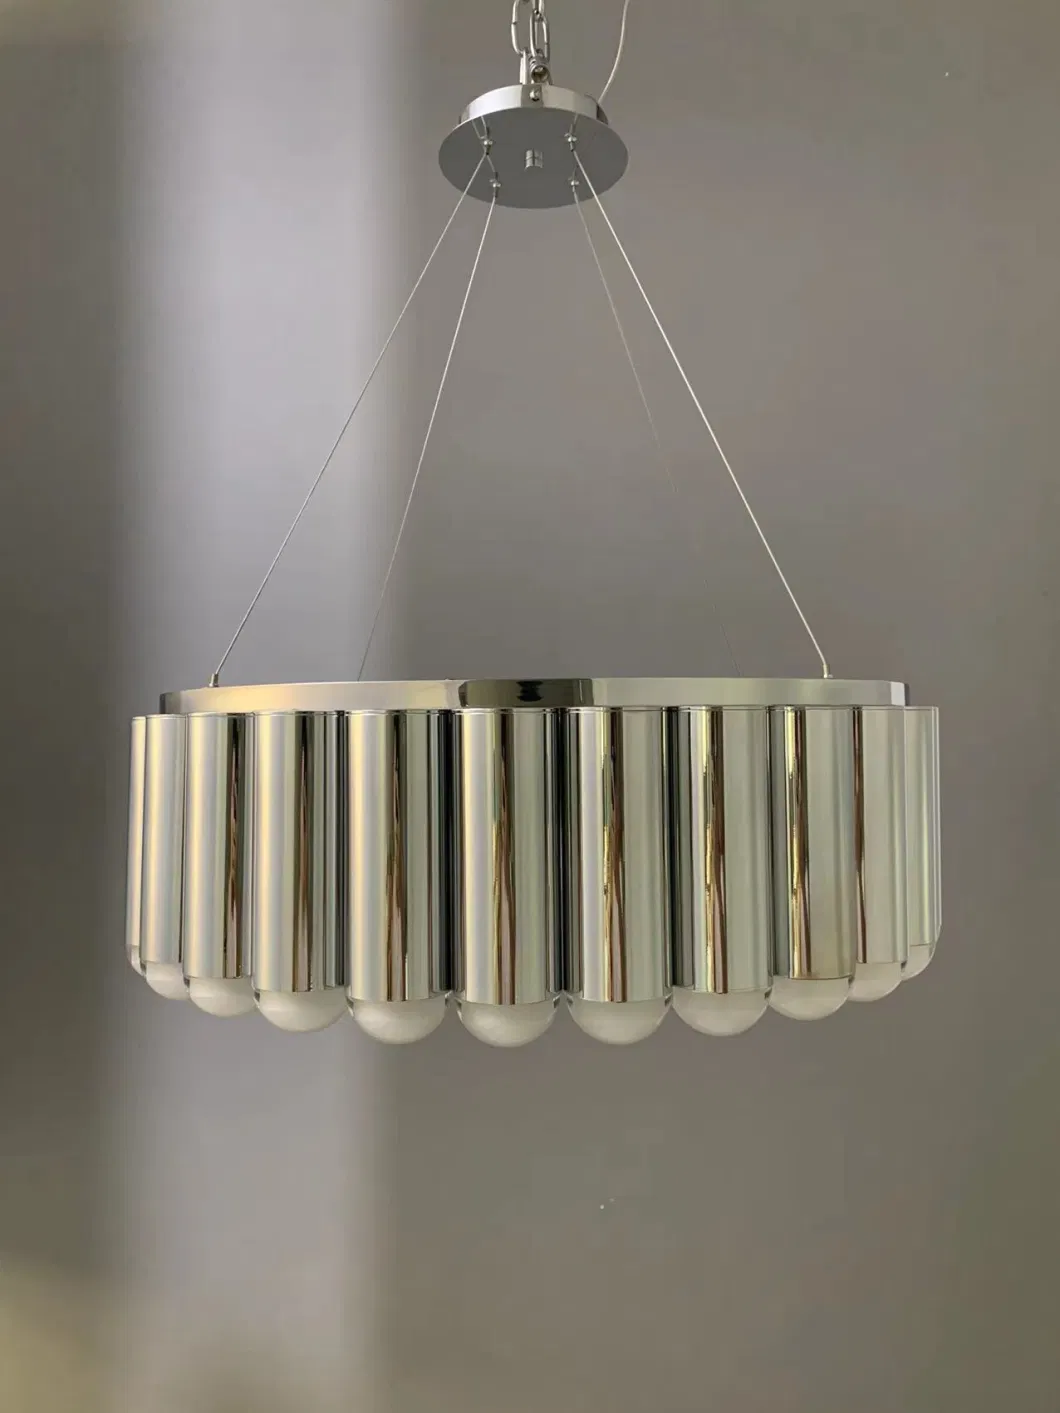 Lee Broom Carousel Aluminium Pipe Round Acrylic Shade Indoor Lighting Pendant Lamp